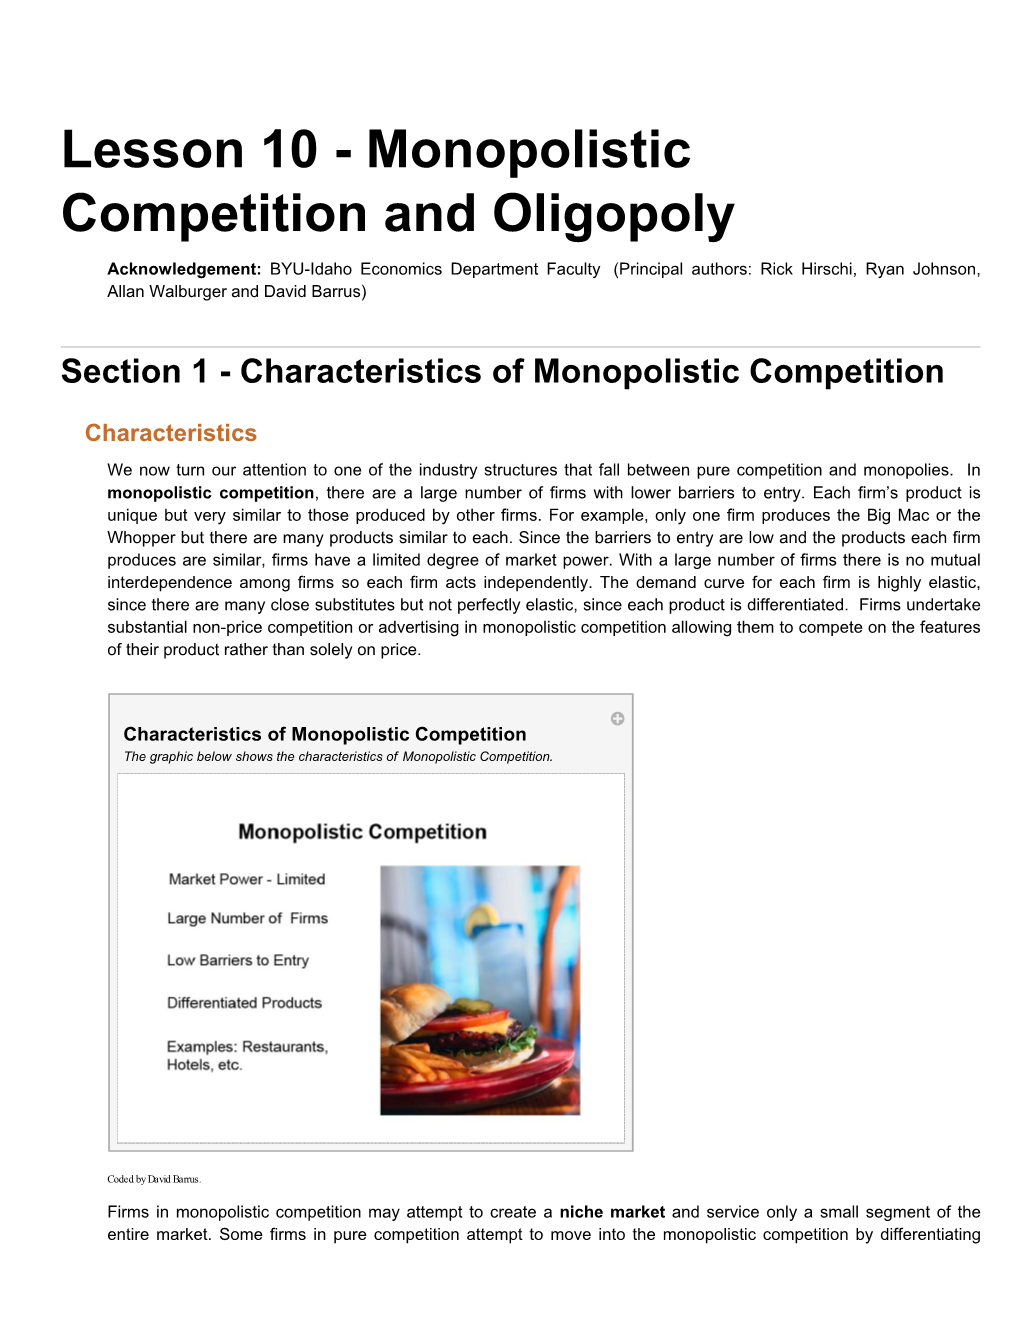 Lesson 10 - Monopolistic Competition and Oligopoly